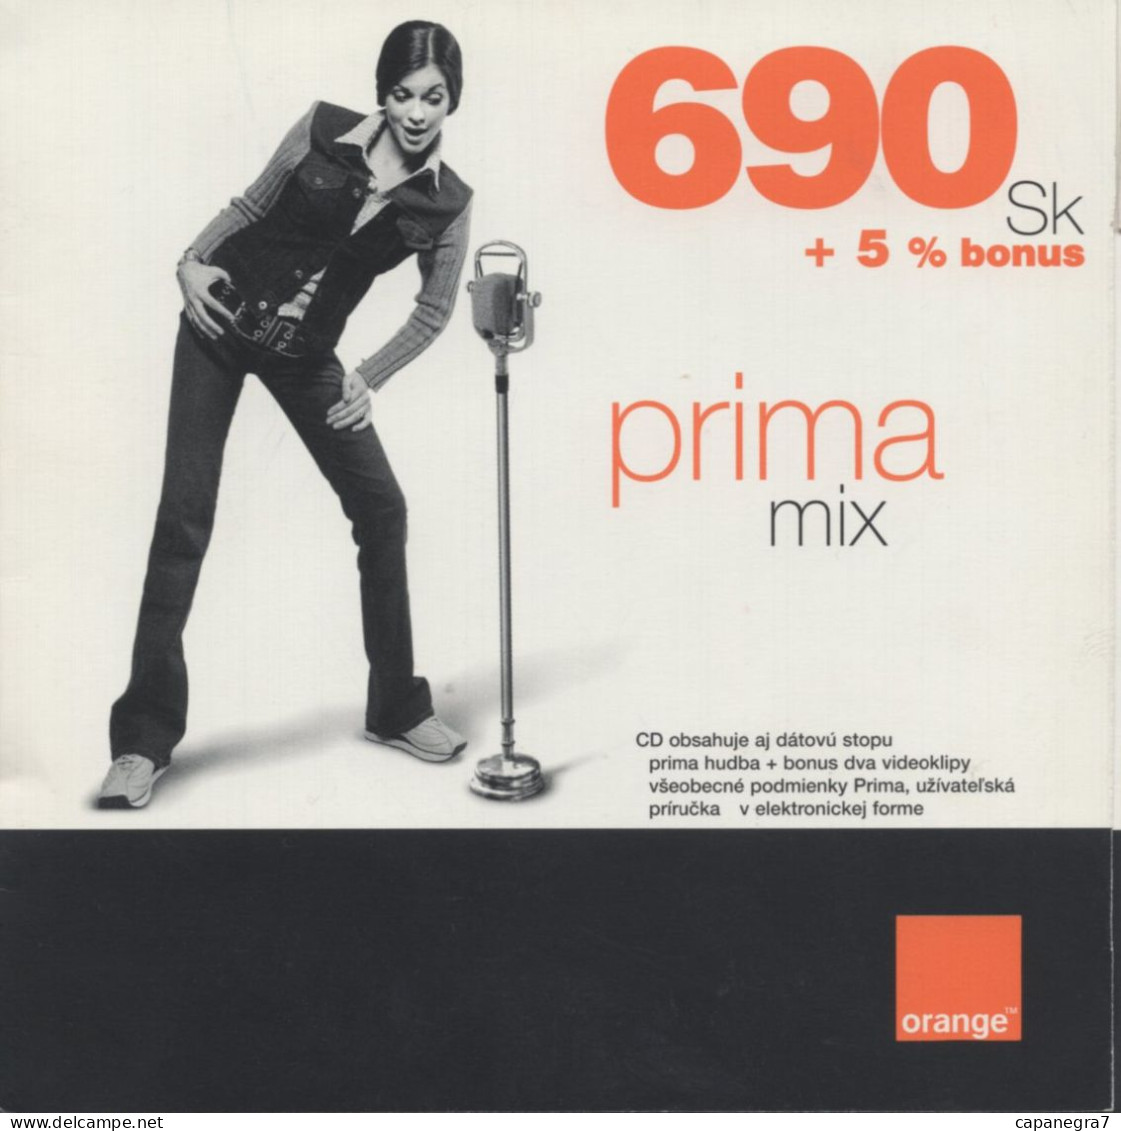 Prima Selection, Prima Mix 690 Sk, Polycarbonate Plastic CD, GSM Refill, Orange Slovakia, Validity 30.06.2004, Slovakia - Slowakije